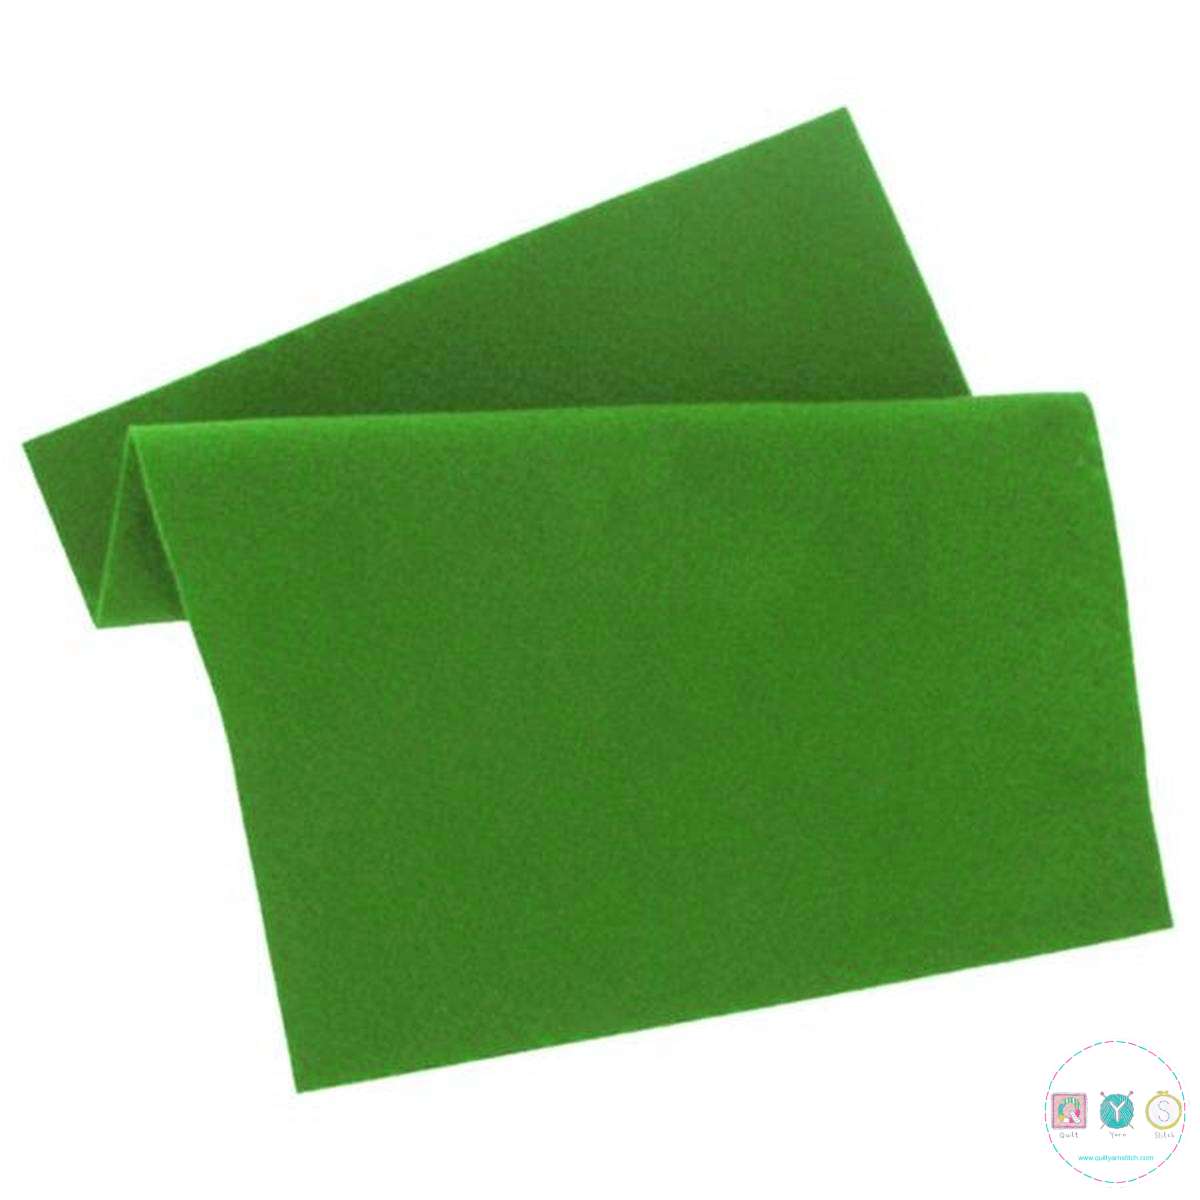 Grass Green Felt Sheet - 12" Square - 30cm Square - Crafting Felt